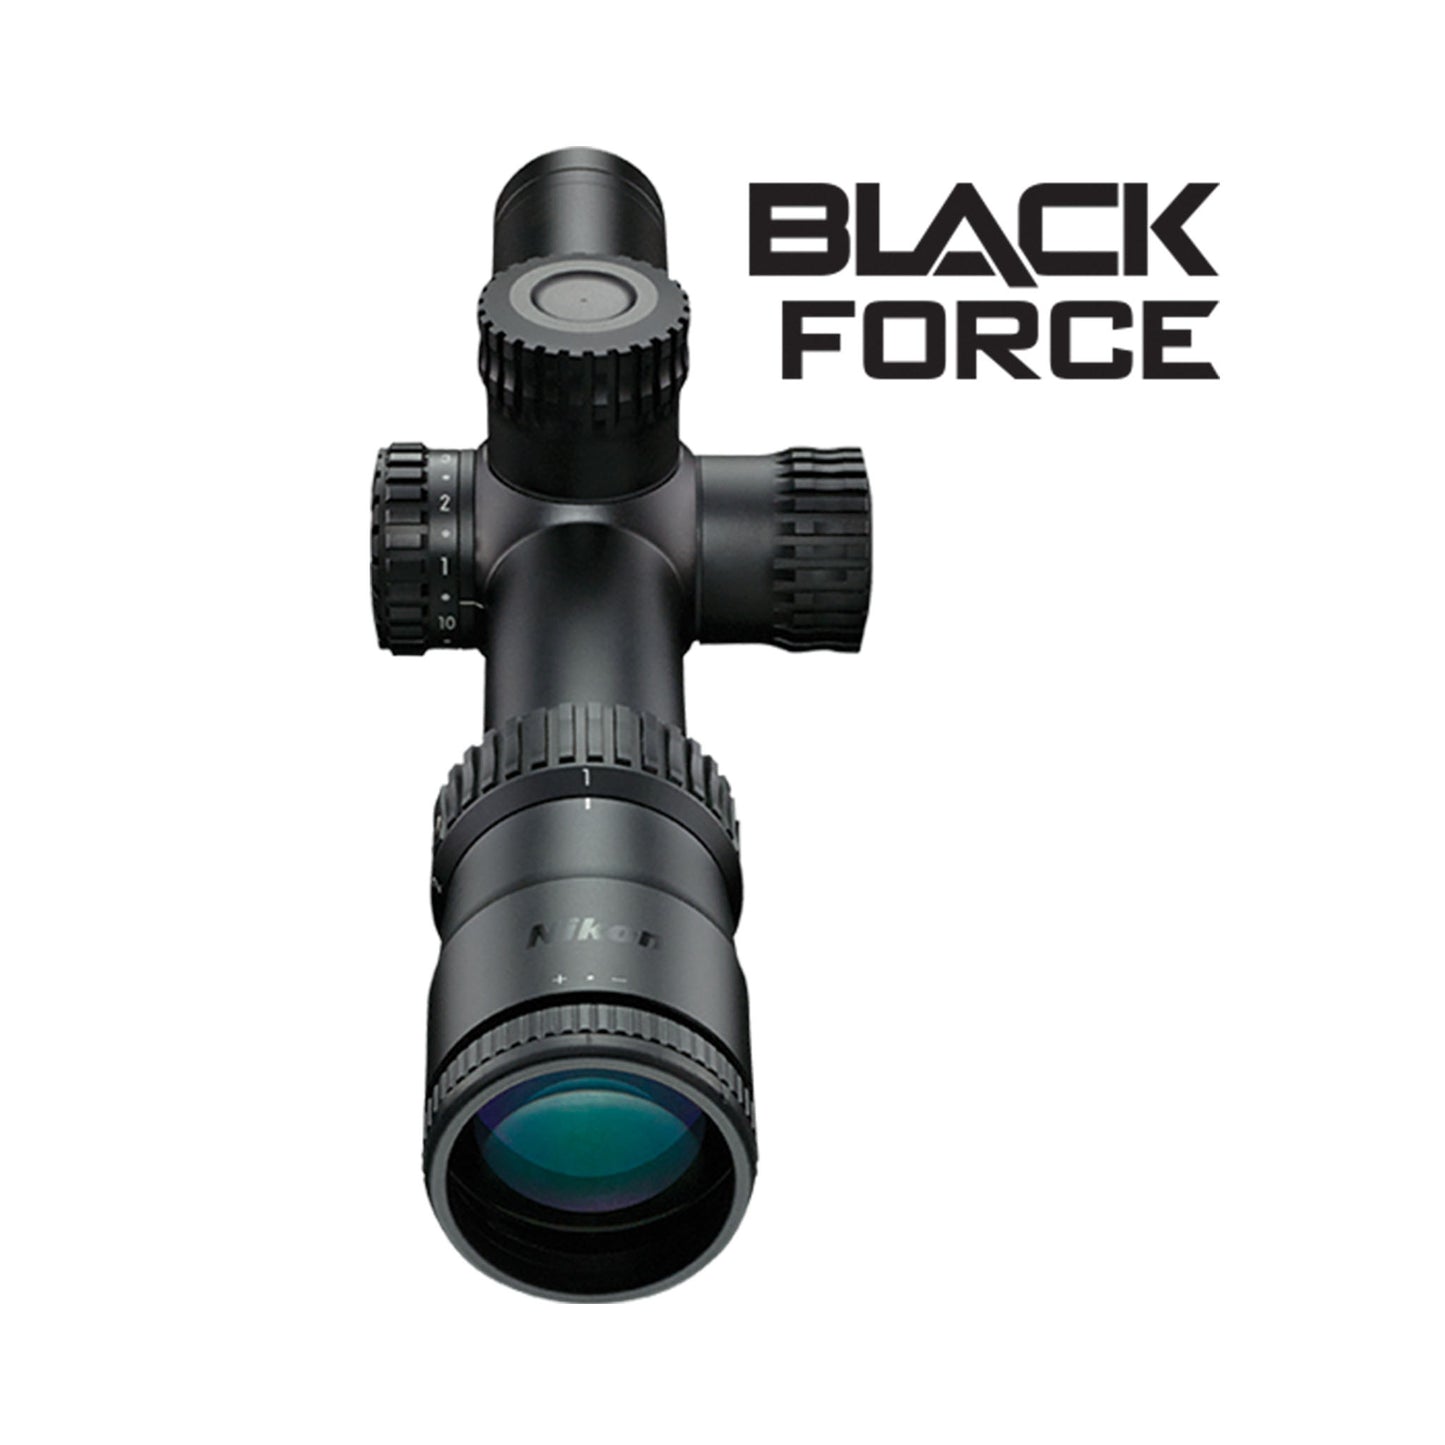 Black Force 1000, 1-4x24mm Riflescope